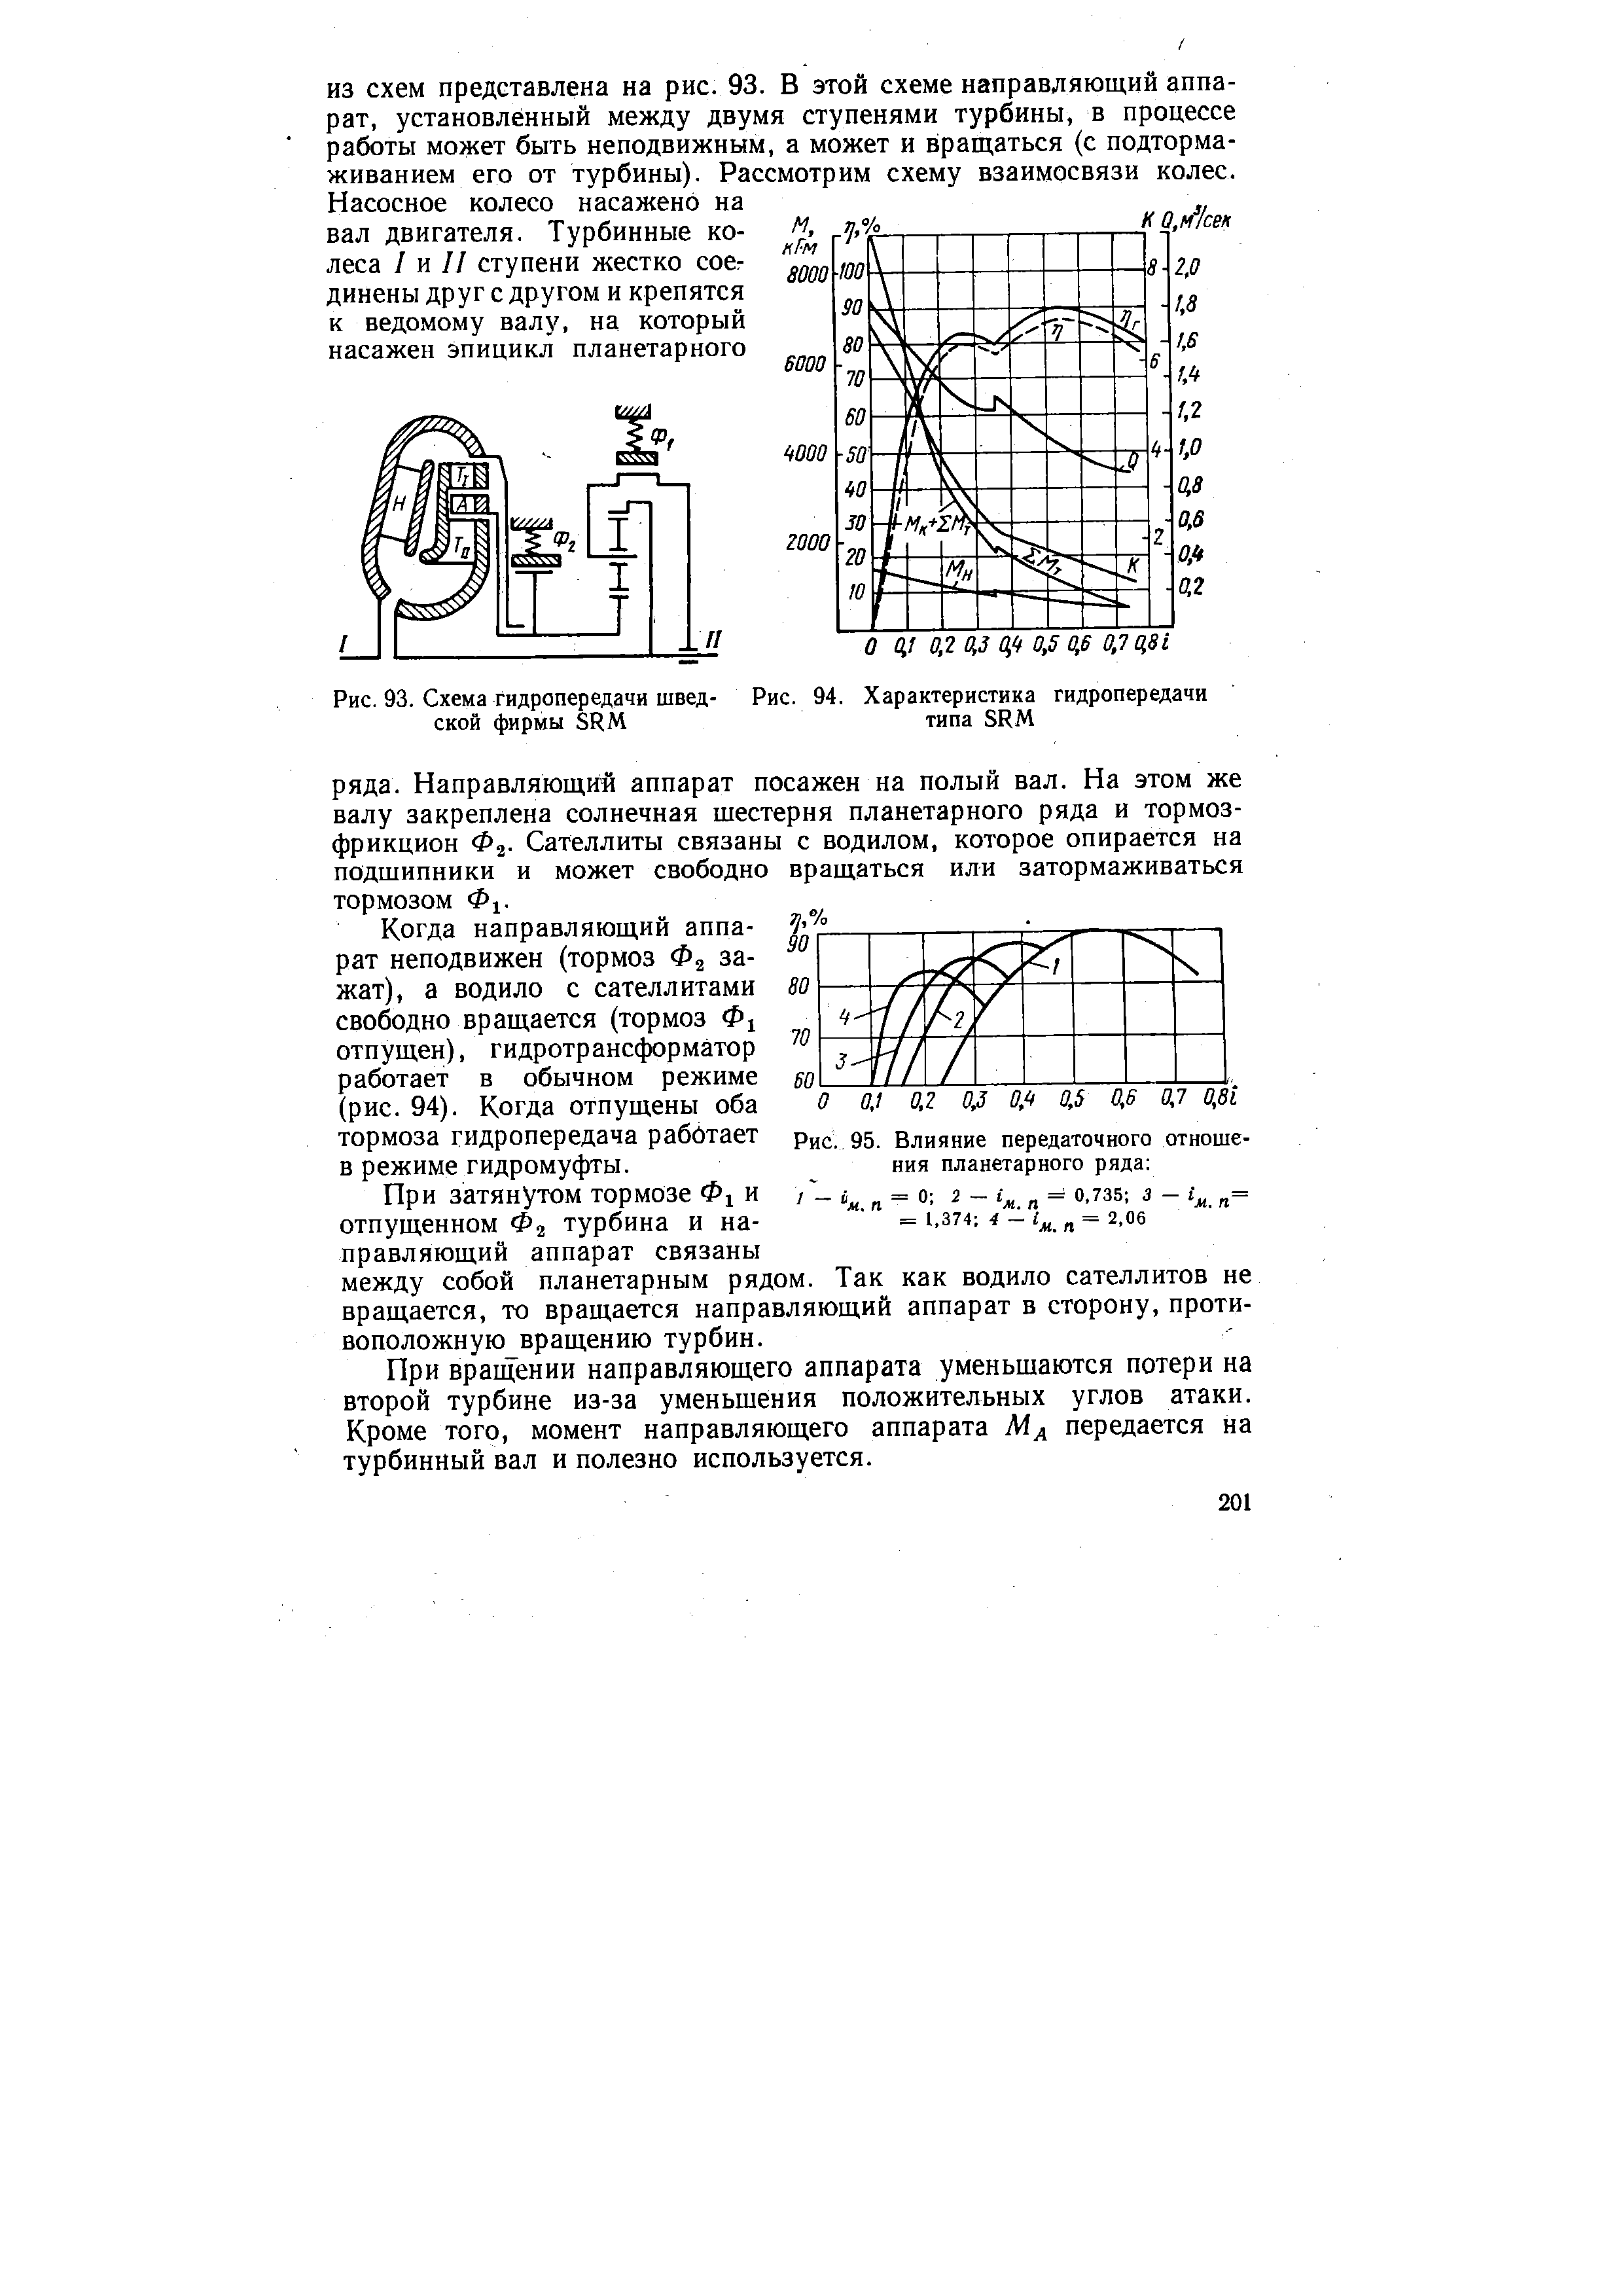 Рис. 94. Характеристика гидропередачи типа ЗРМ
